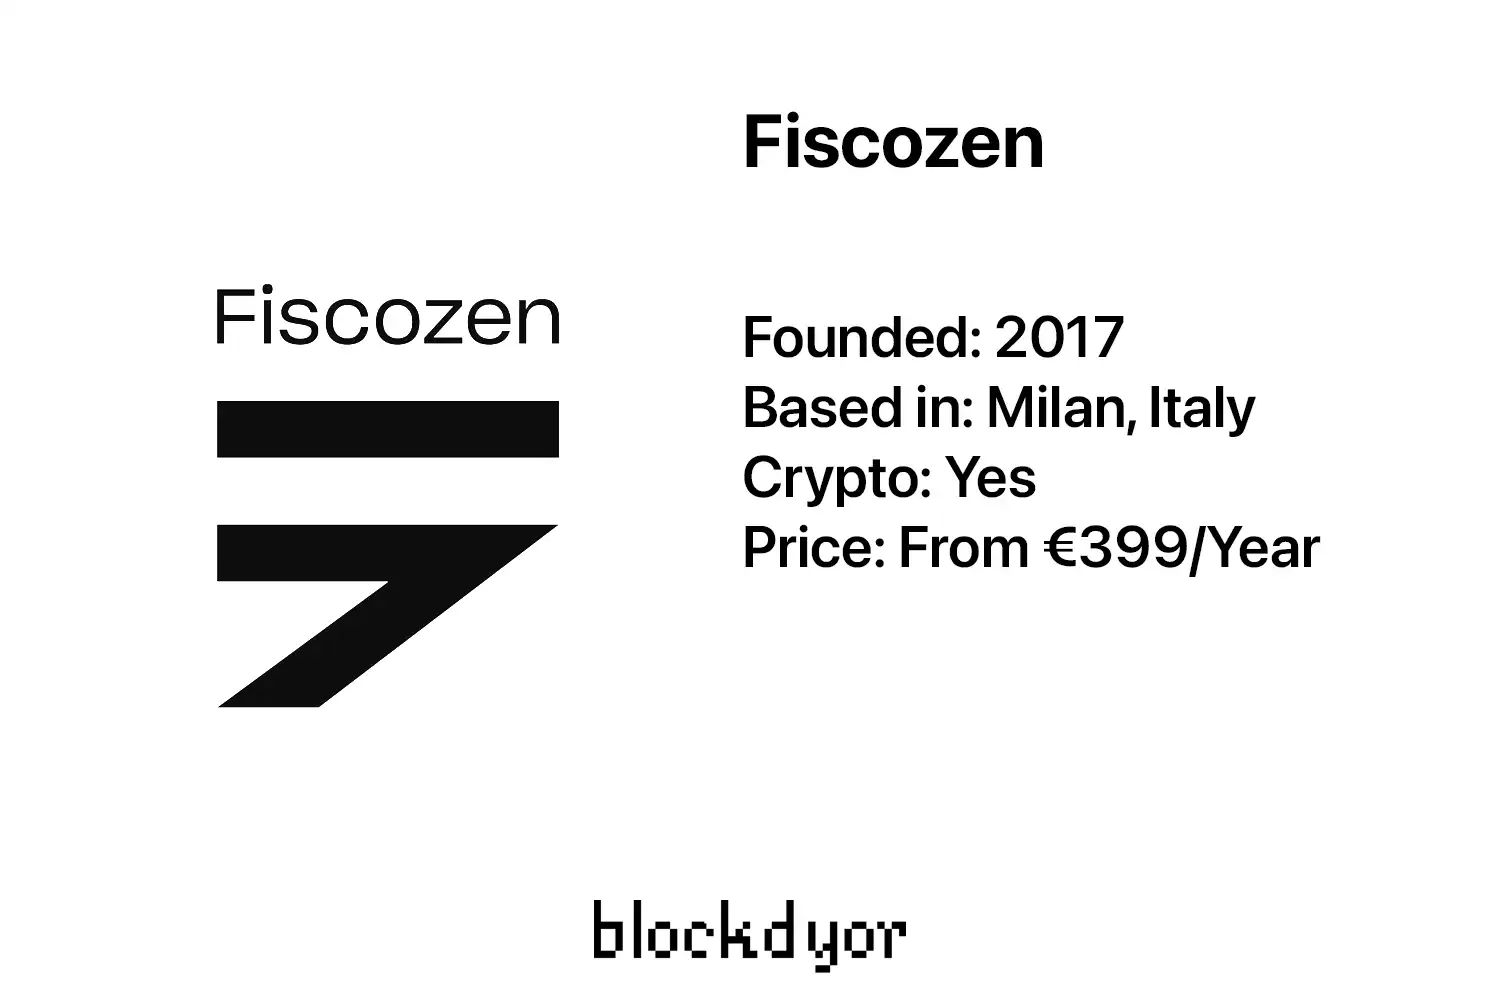 Fiscozen Overview